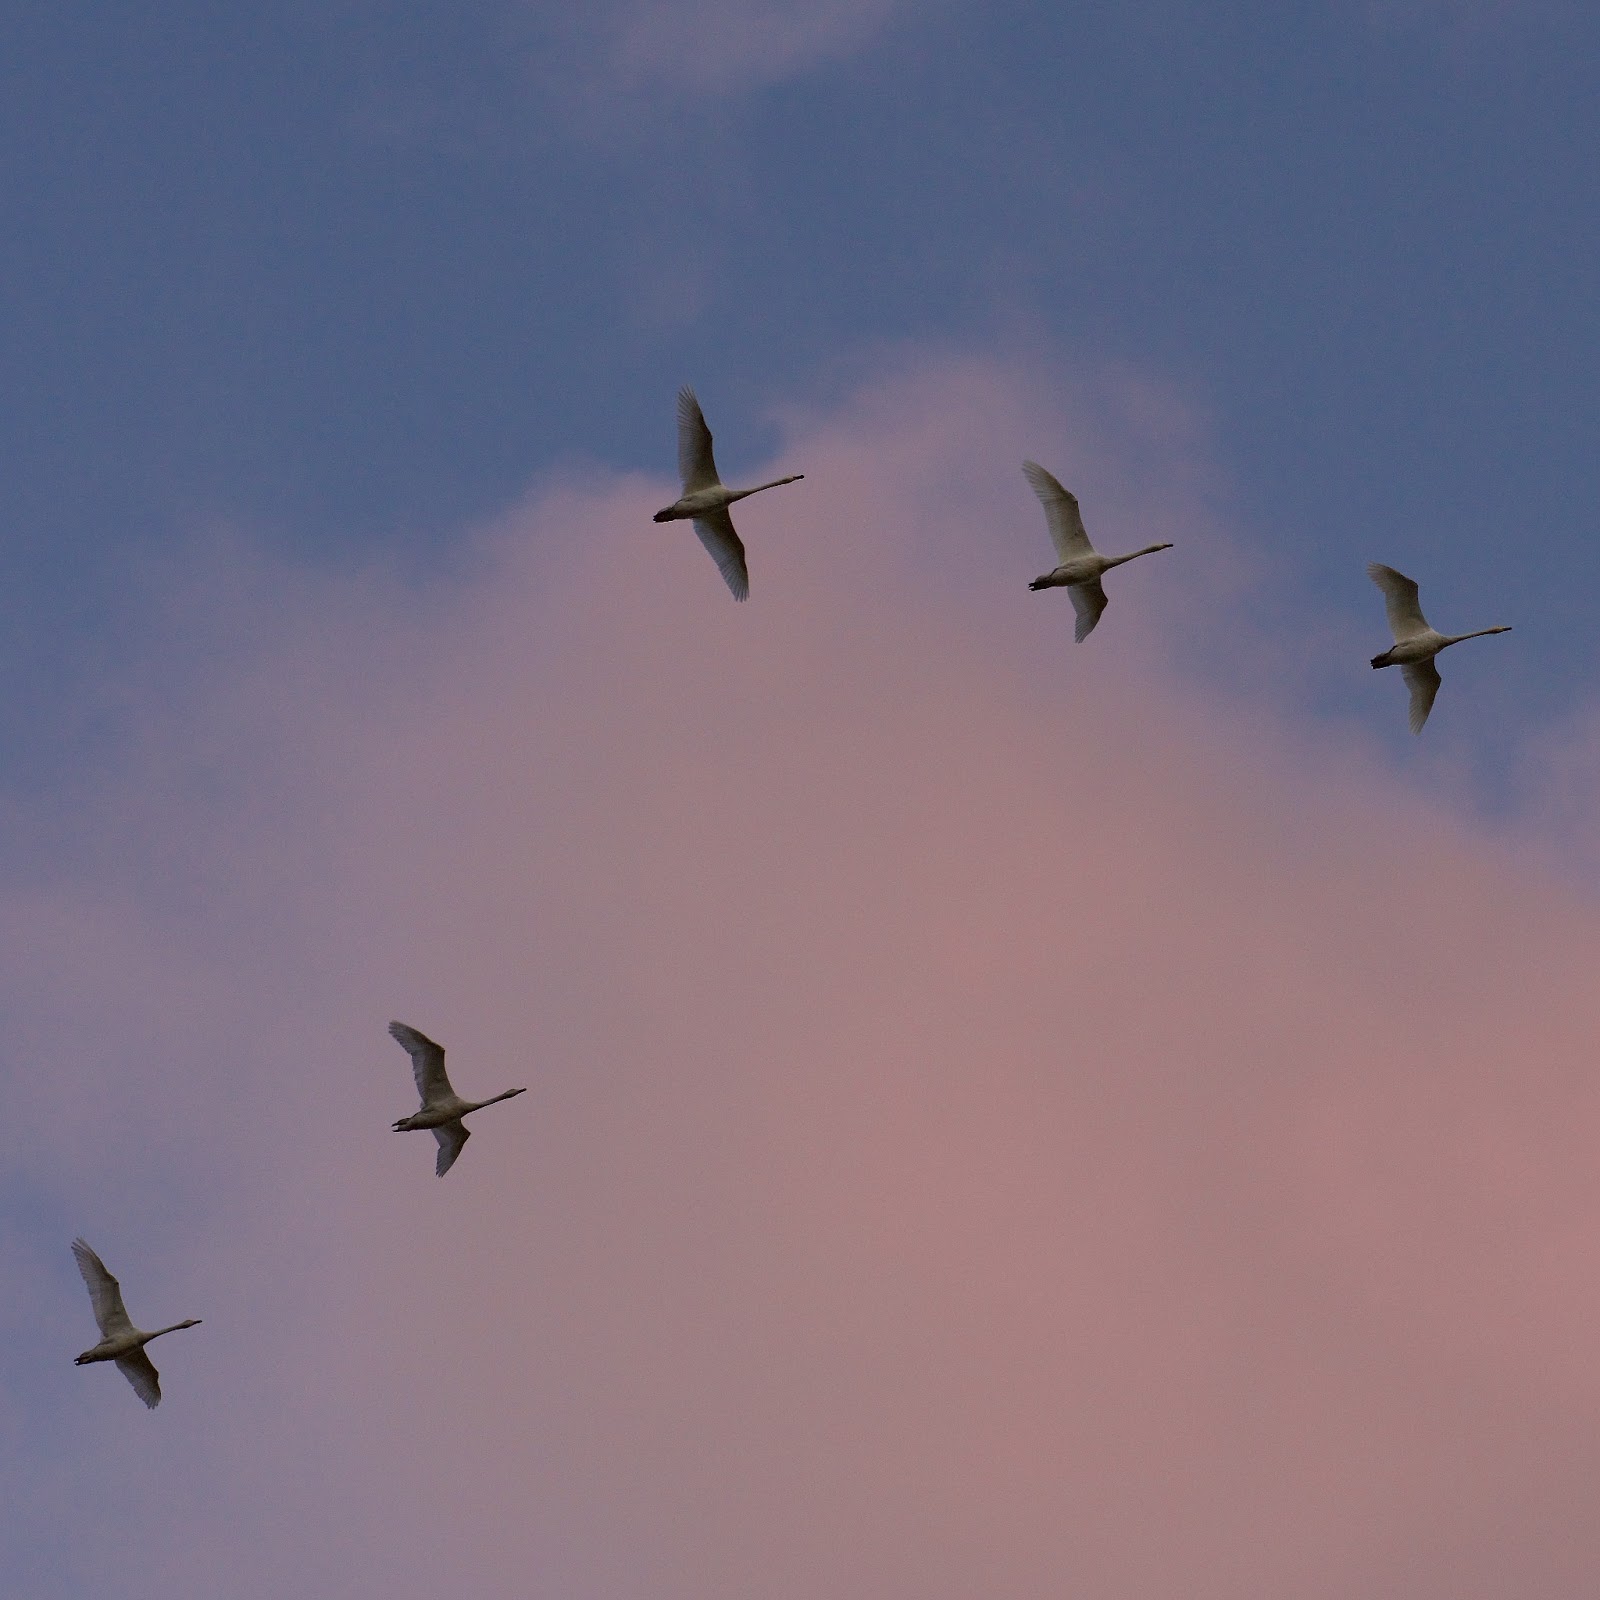 Treshnish Farm: Whooper swans at sunset